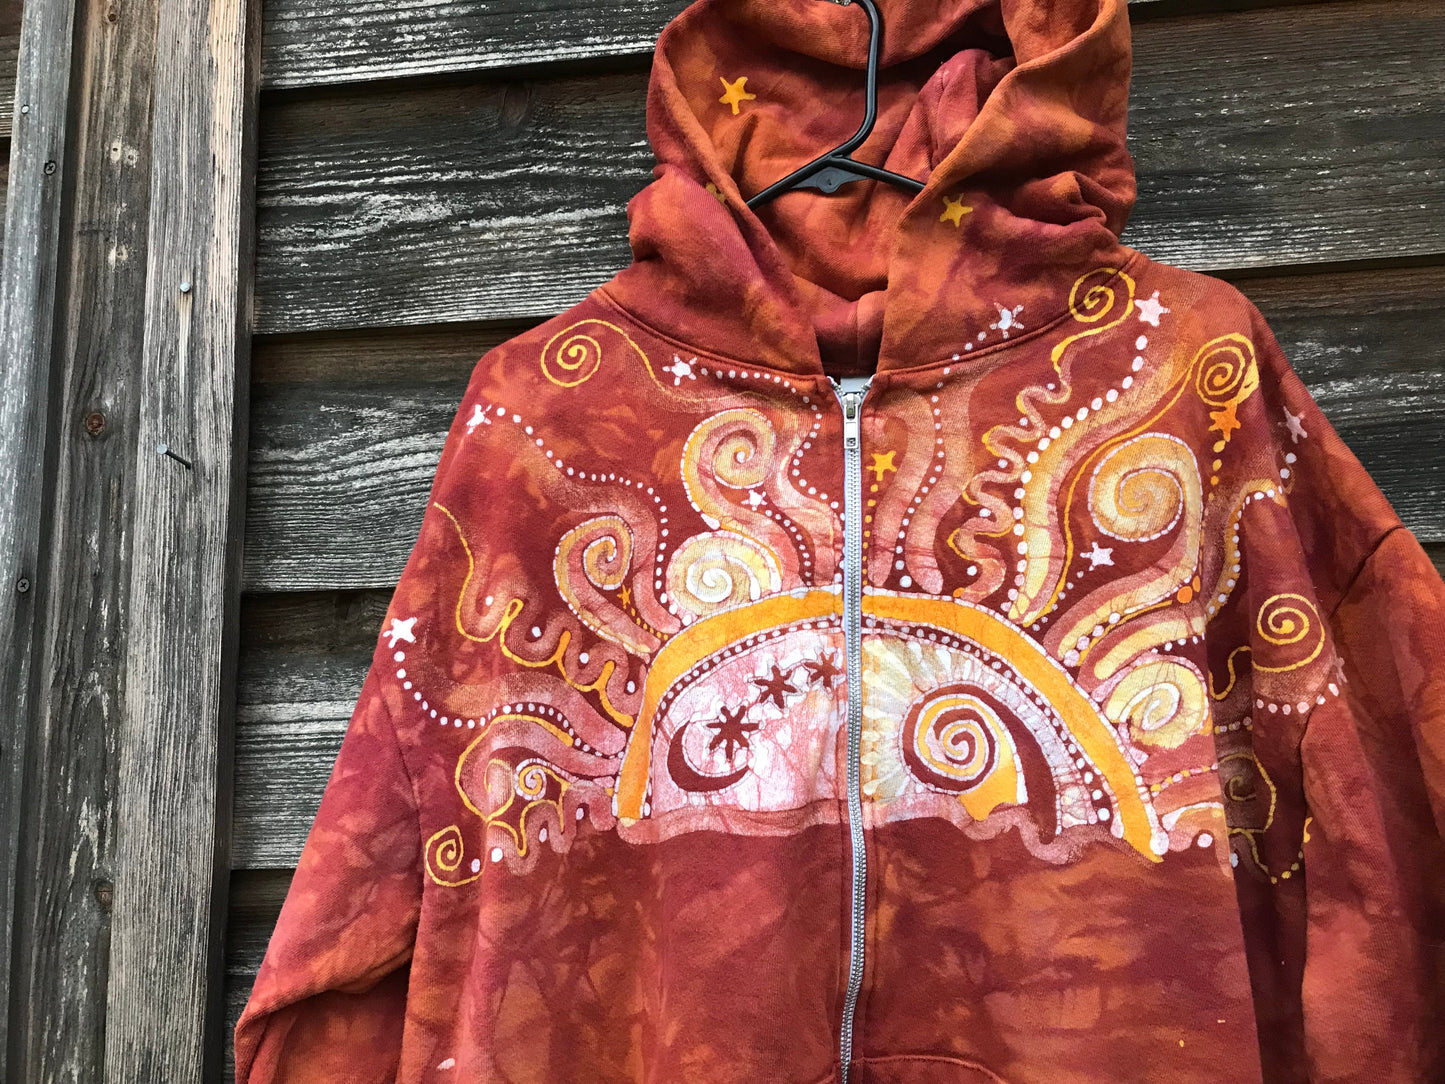 Made for Diane E. Membership Exclusive - Handcrafted Batik Zipper Hoodie hoodie batikwalla 